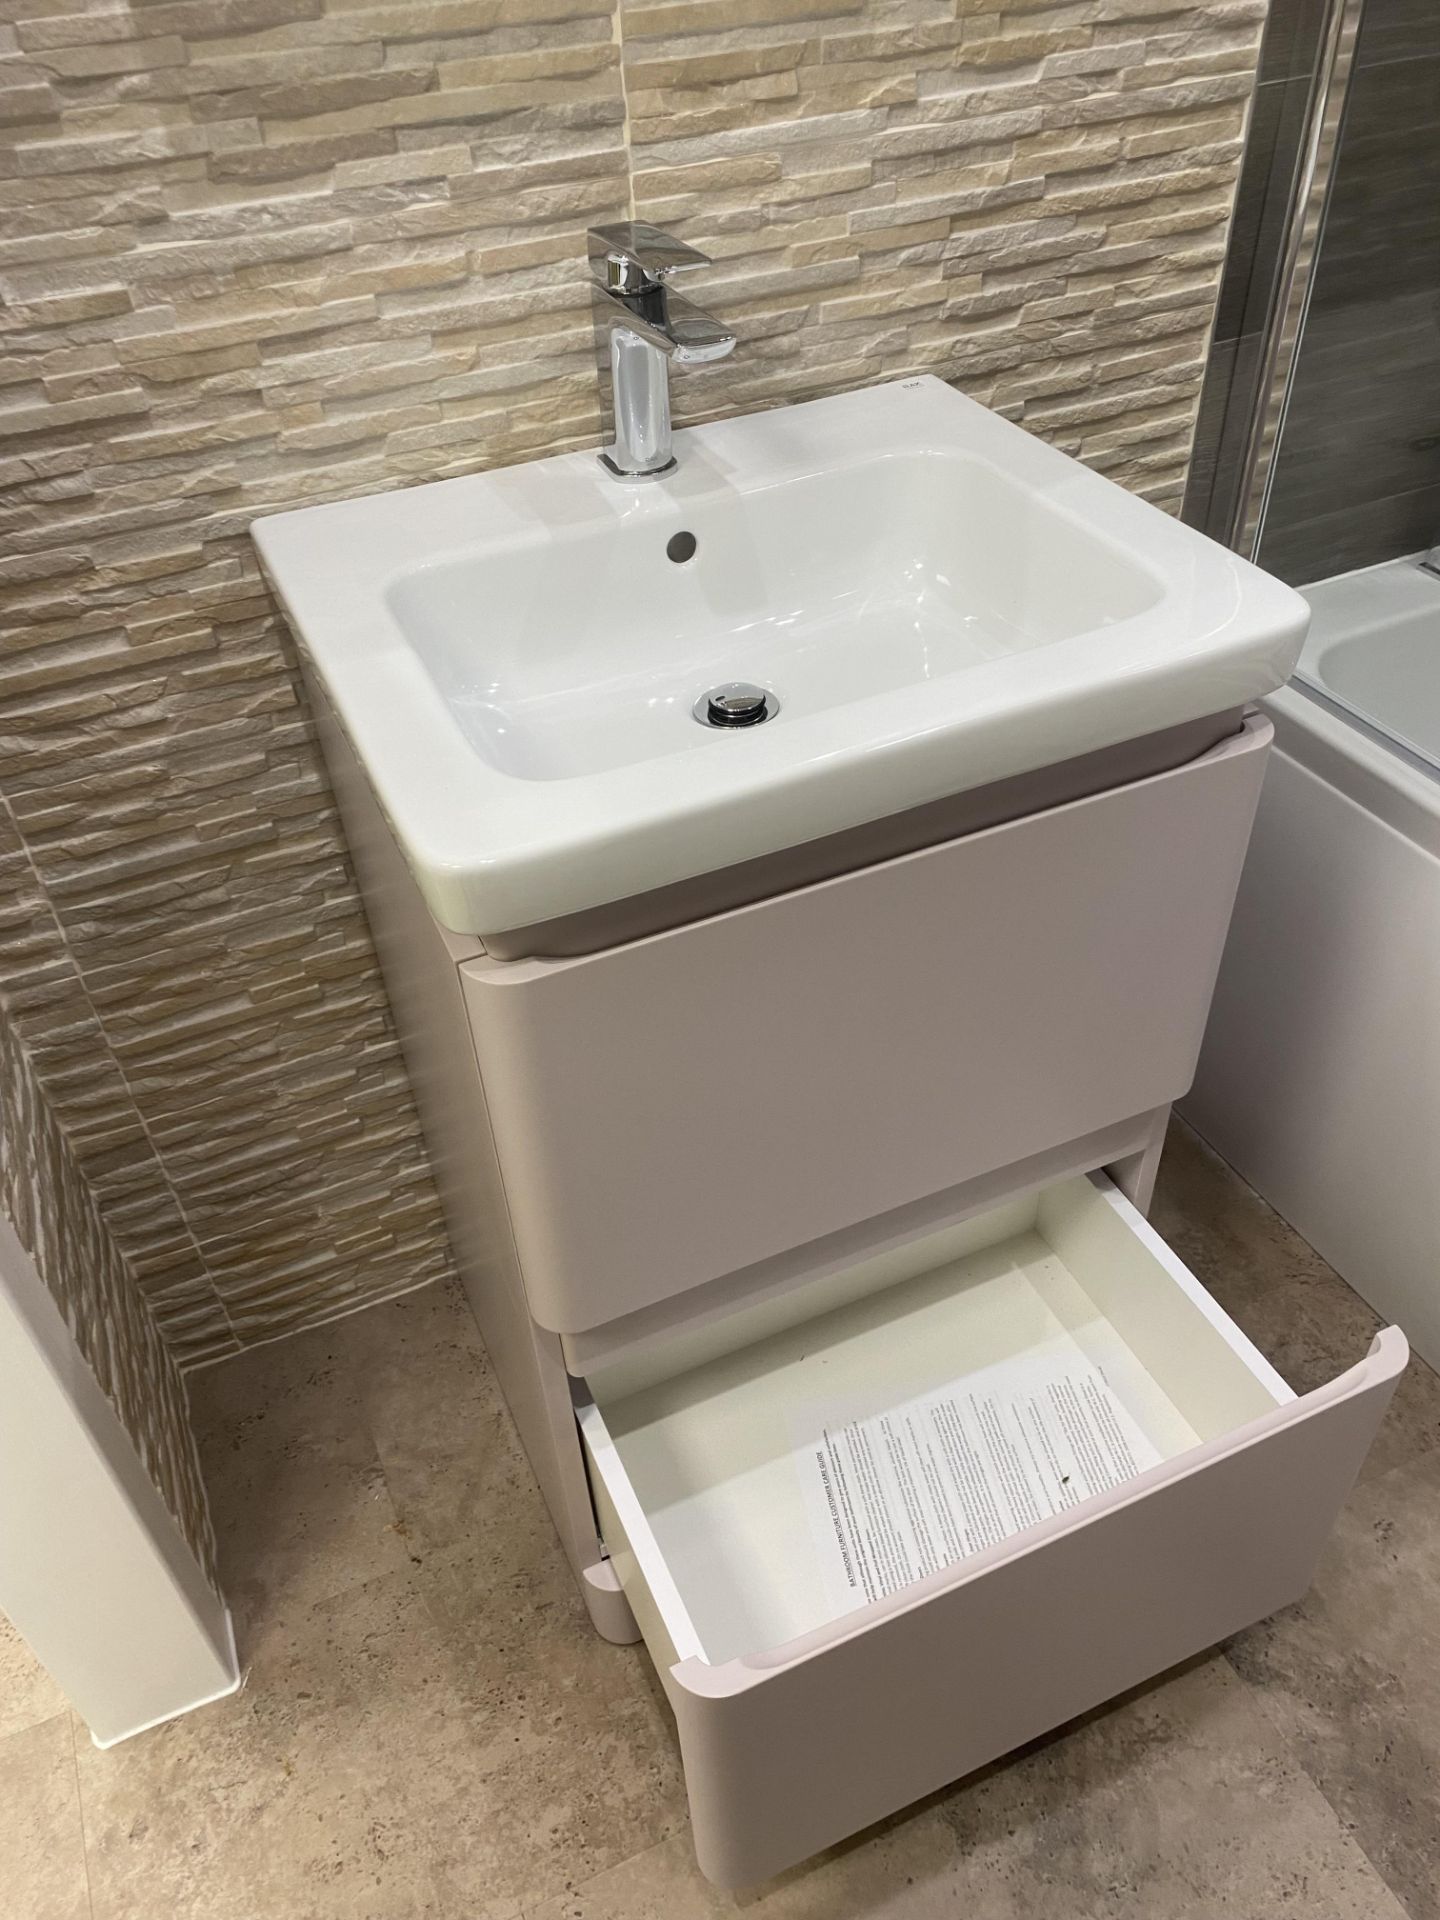 Rak Ceramics display bathroom to include Rak Ceramics cistern and toilet bowl, sink with pedestal d - Bild 3 aus 6